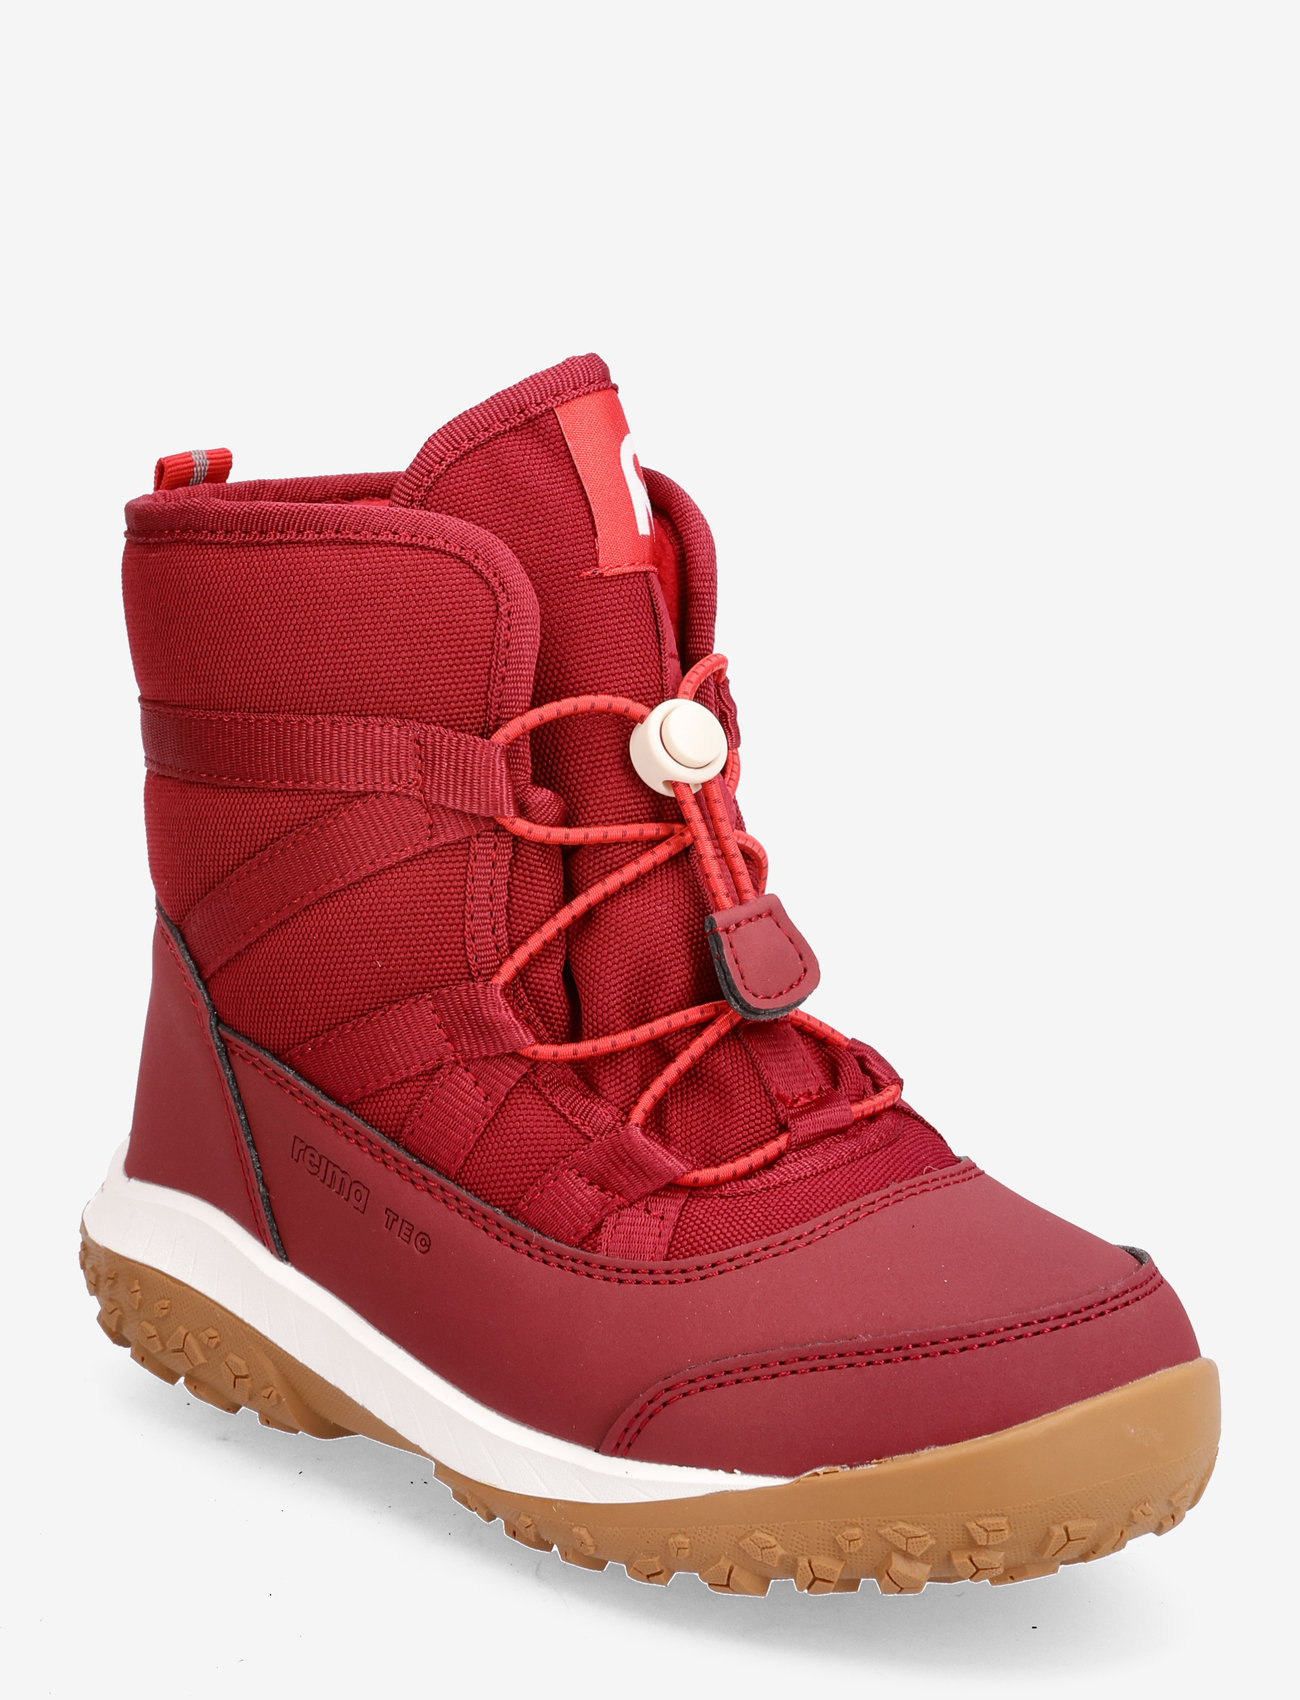 Reima - Reimatec winter boots, Myrsky - kinder - jam red - 0